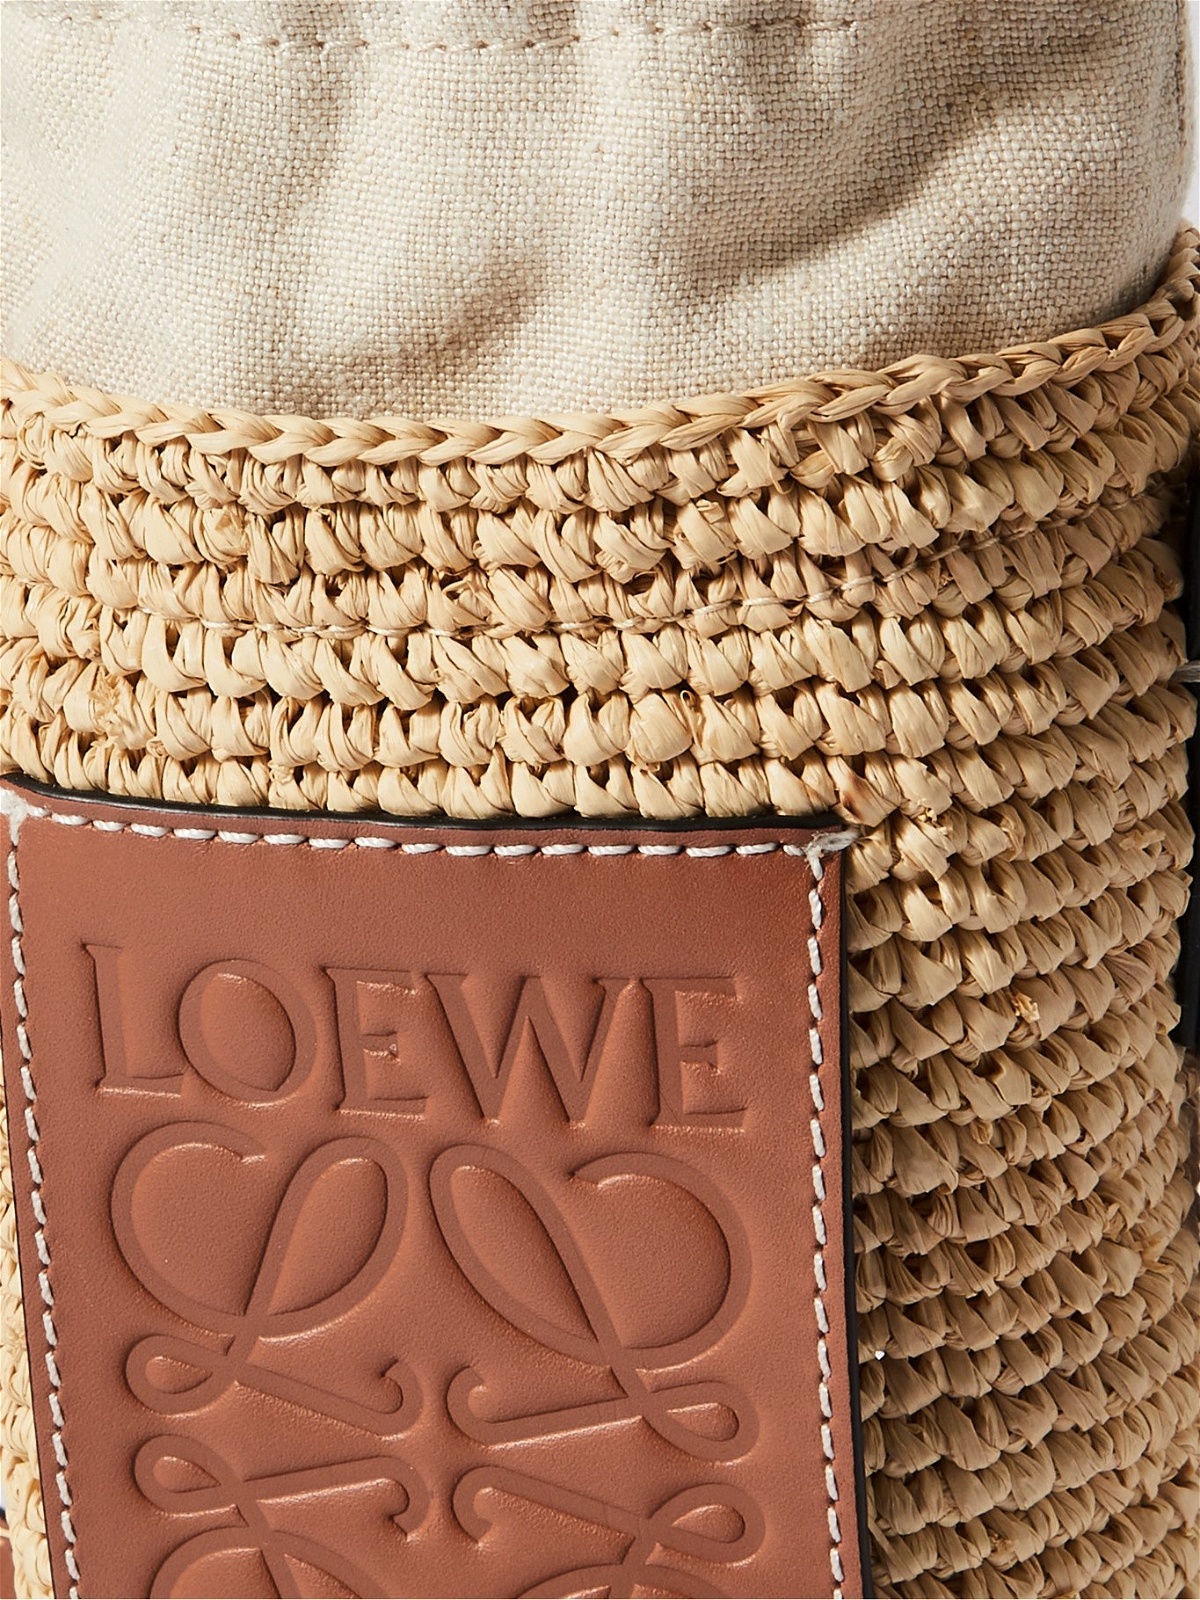 LOEWE - Paula's Ibiza Leather-Trimmed Woven Raffia Pouch Loewe